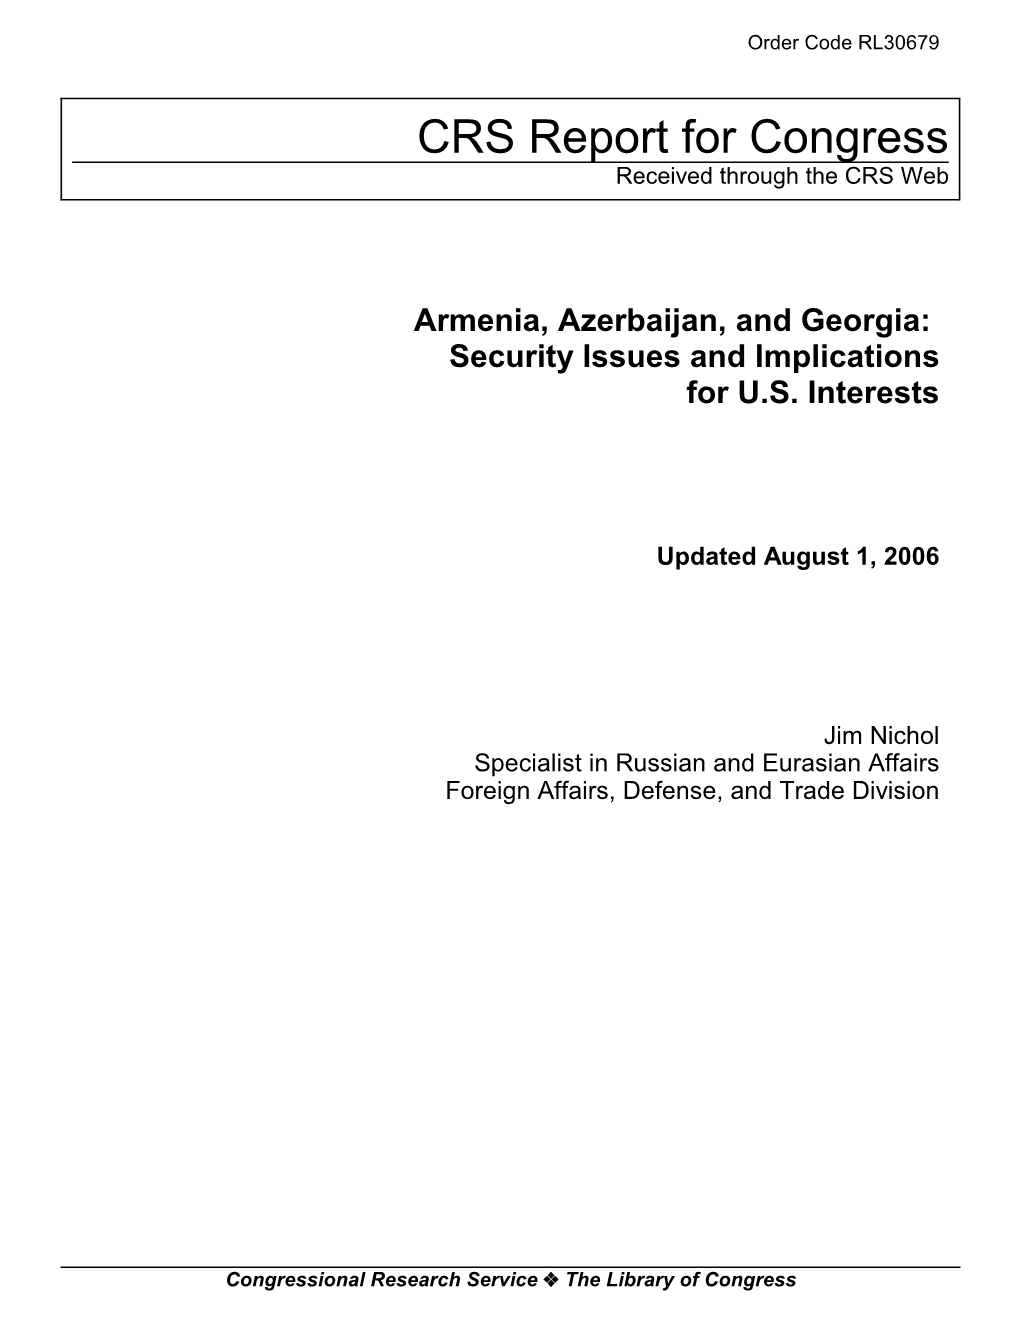 Armenia, Azerbaijan, and Georgia: Security Issues and Implications for U.S